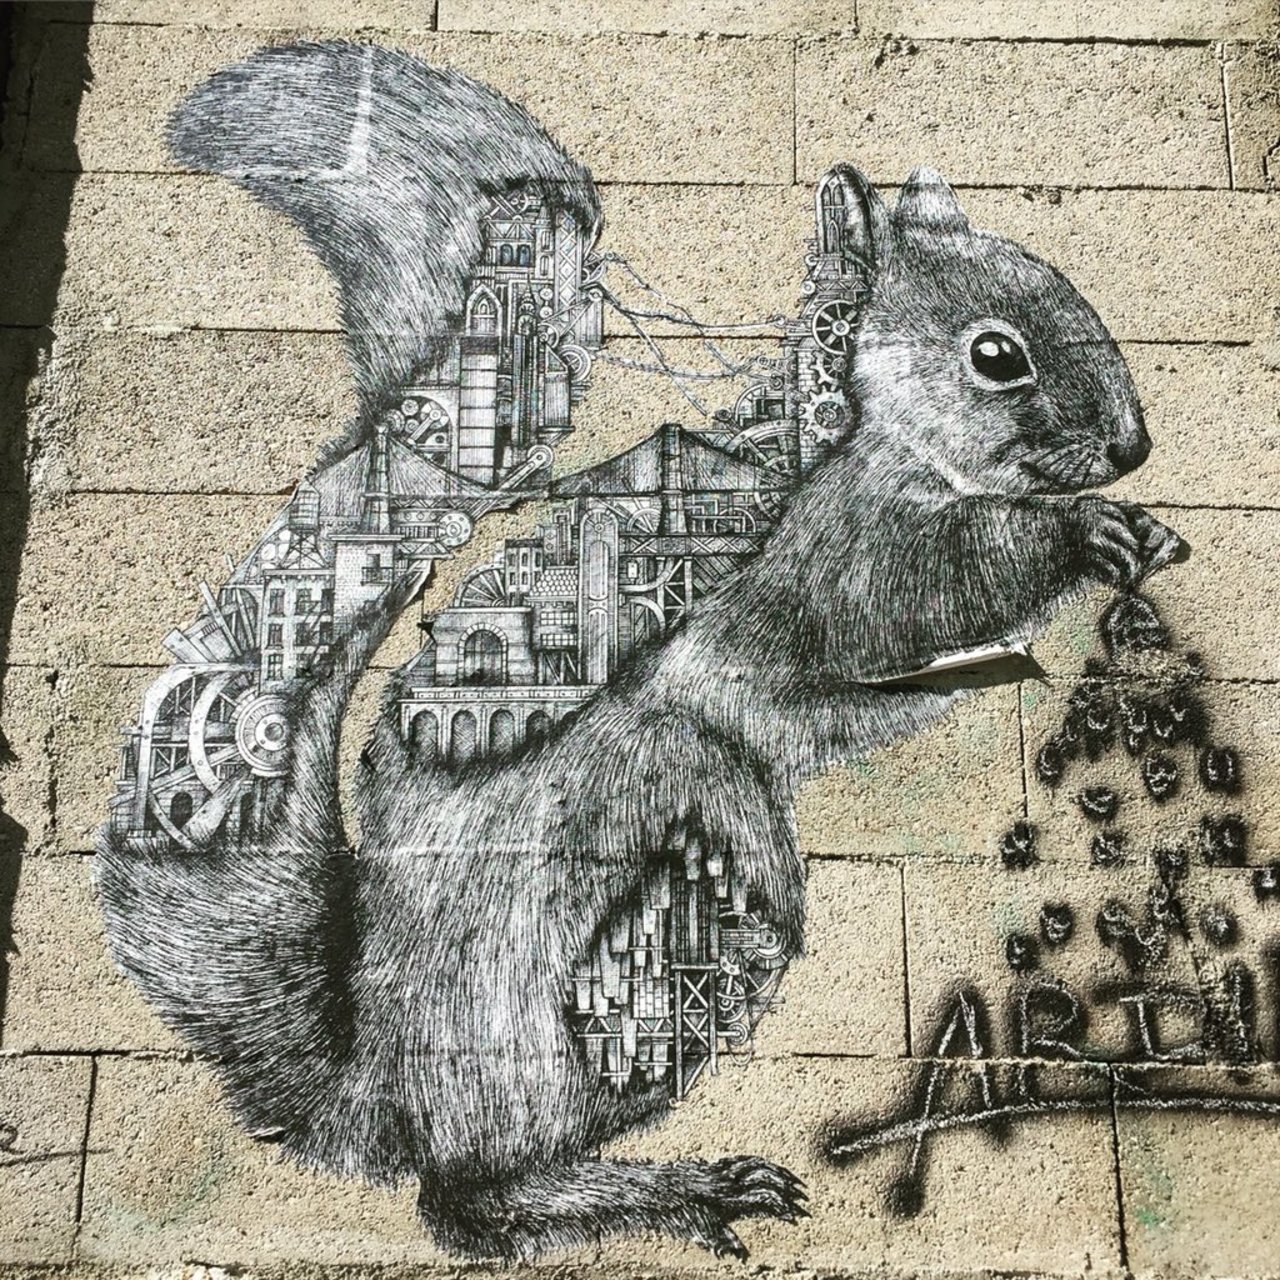 Mechanic squirrel by #ardif #squirrel #streetart #urbanart #graffiti #wall #streetphoto #pochoir #stencil #graffart #spray #bombing #nirindastreet https://t.co/gyykX5eXHJ